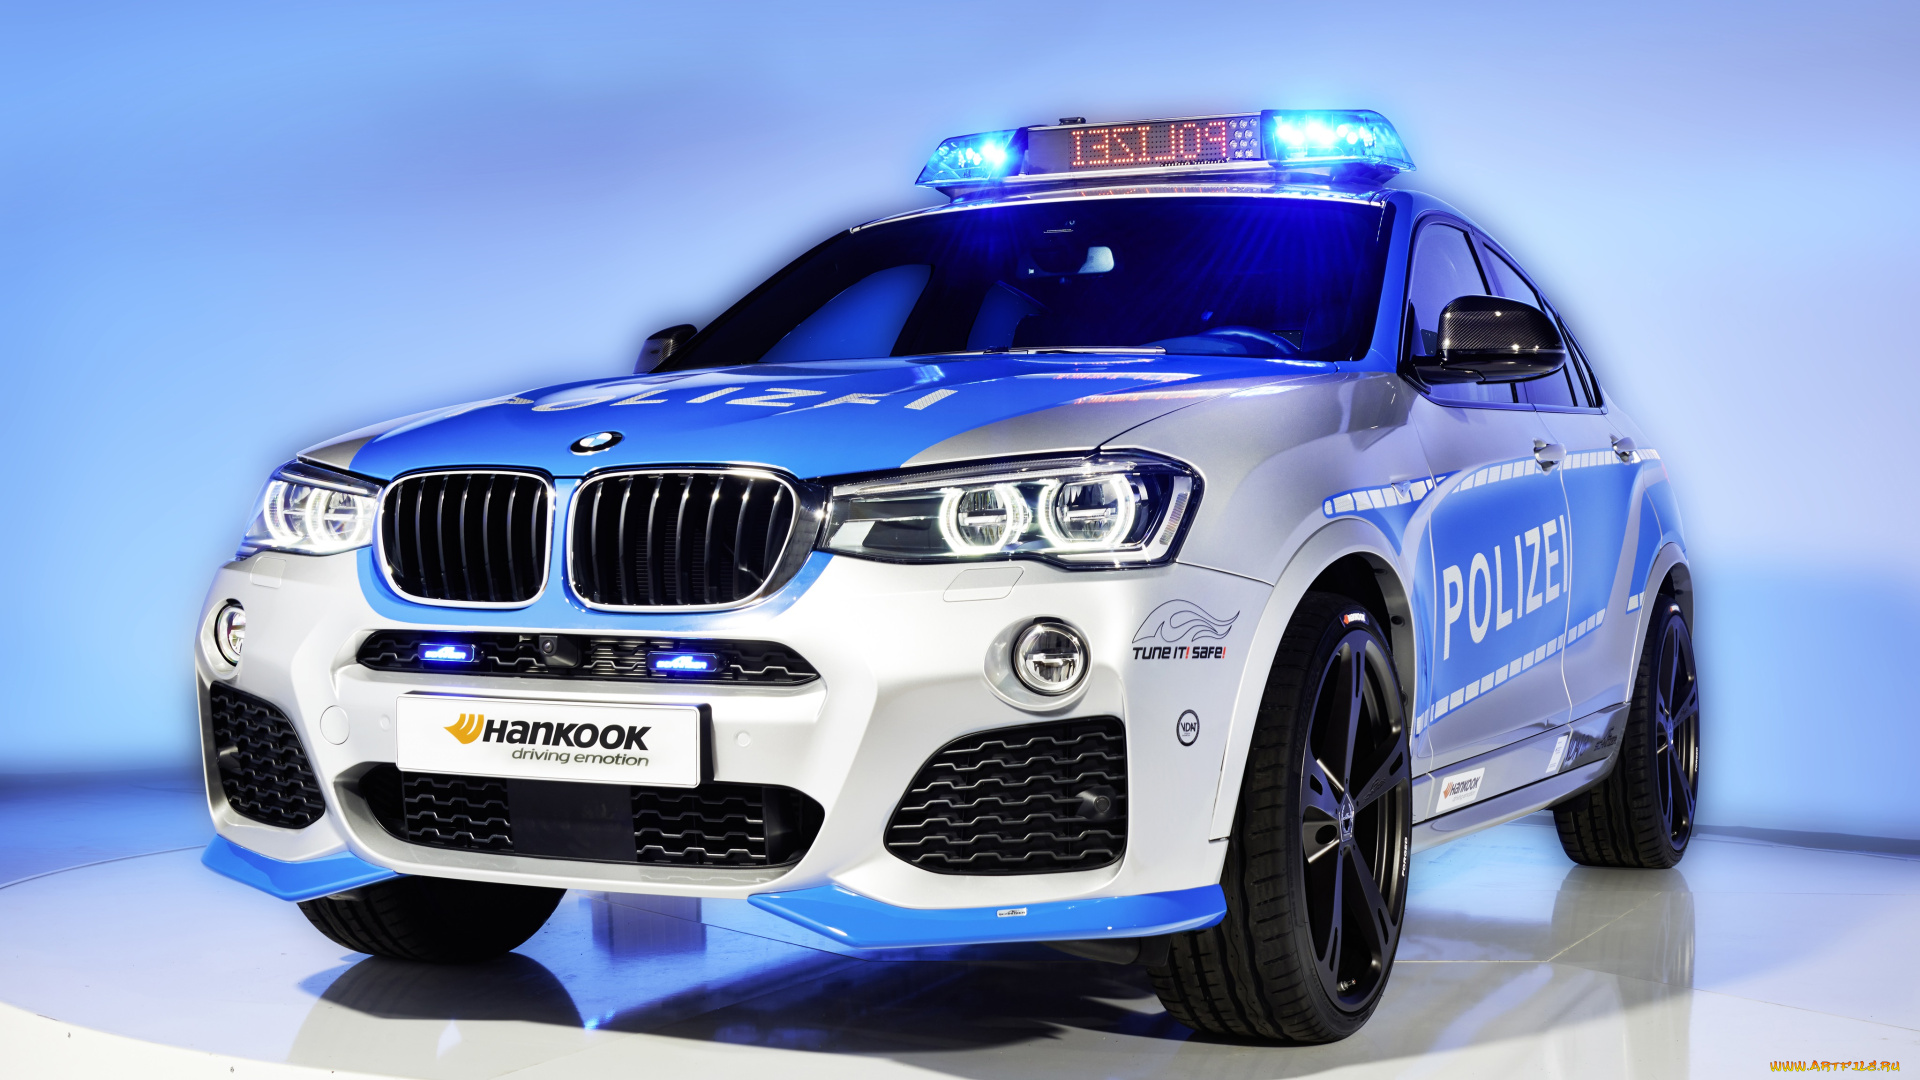 автомобили, полиция, f26, 2014г, concept, ac, schnitzer, acs, x4, polizei, tune, it, safe